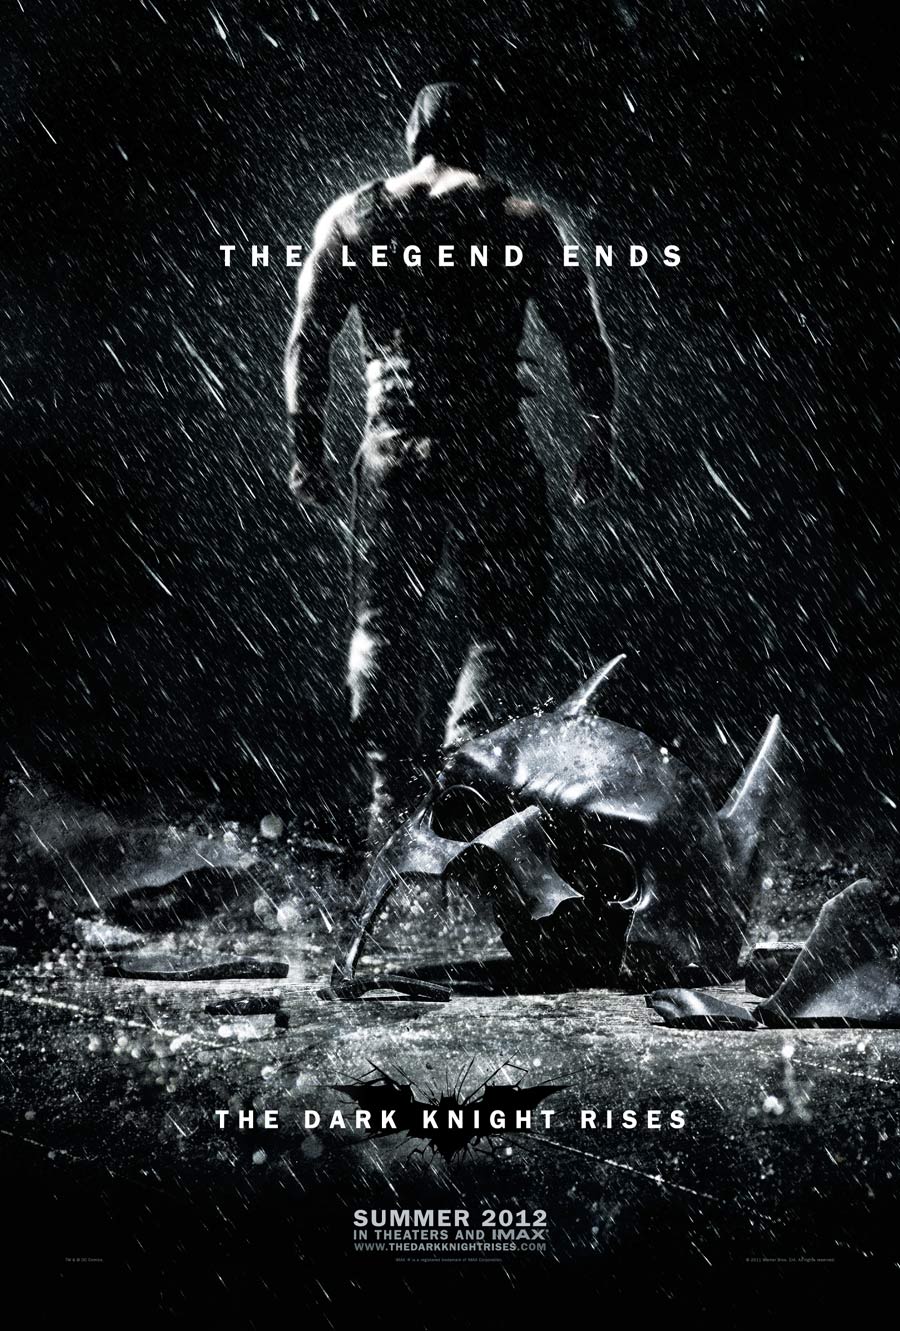 The Dark Knight Rises (2012) - IMDb